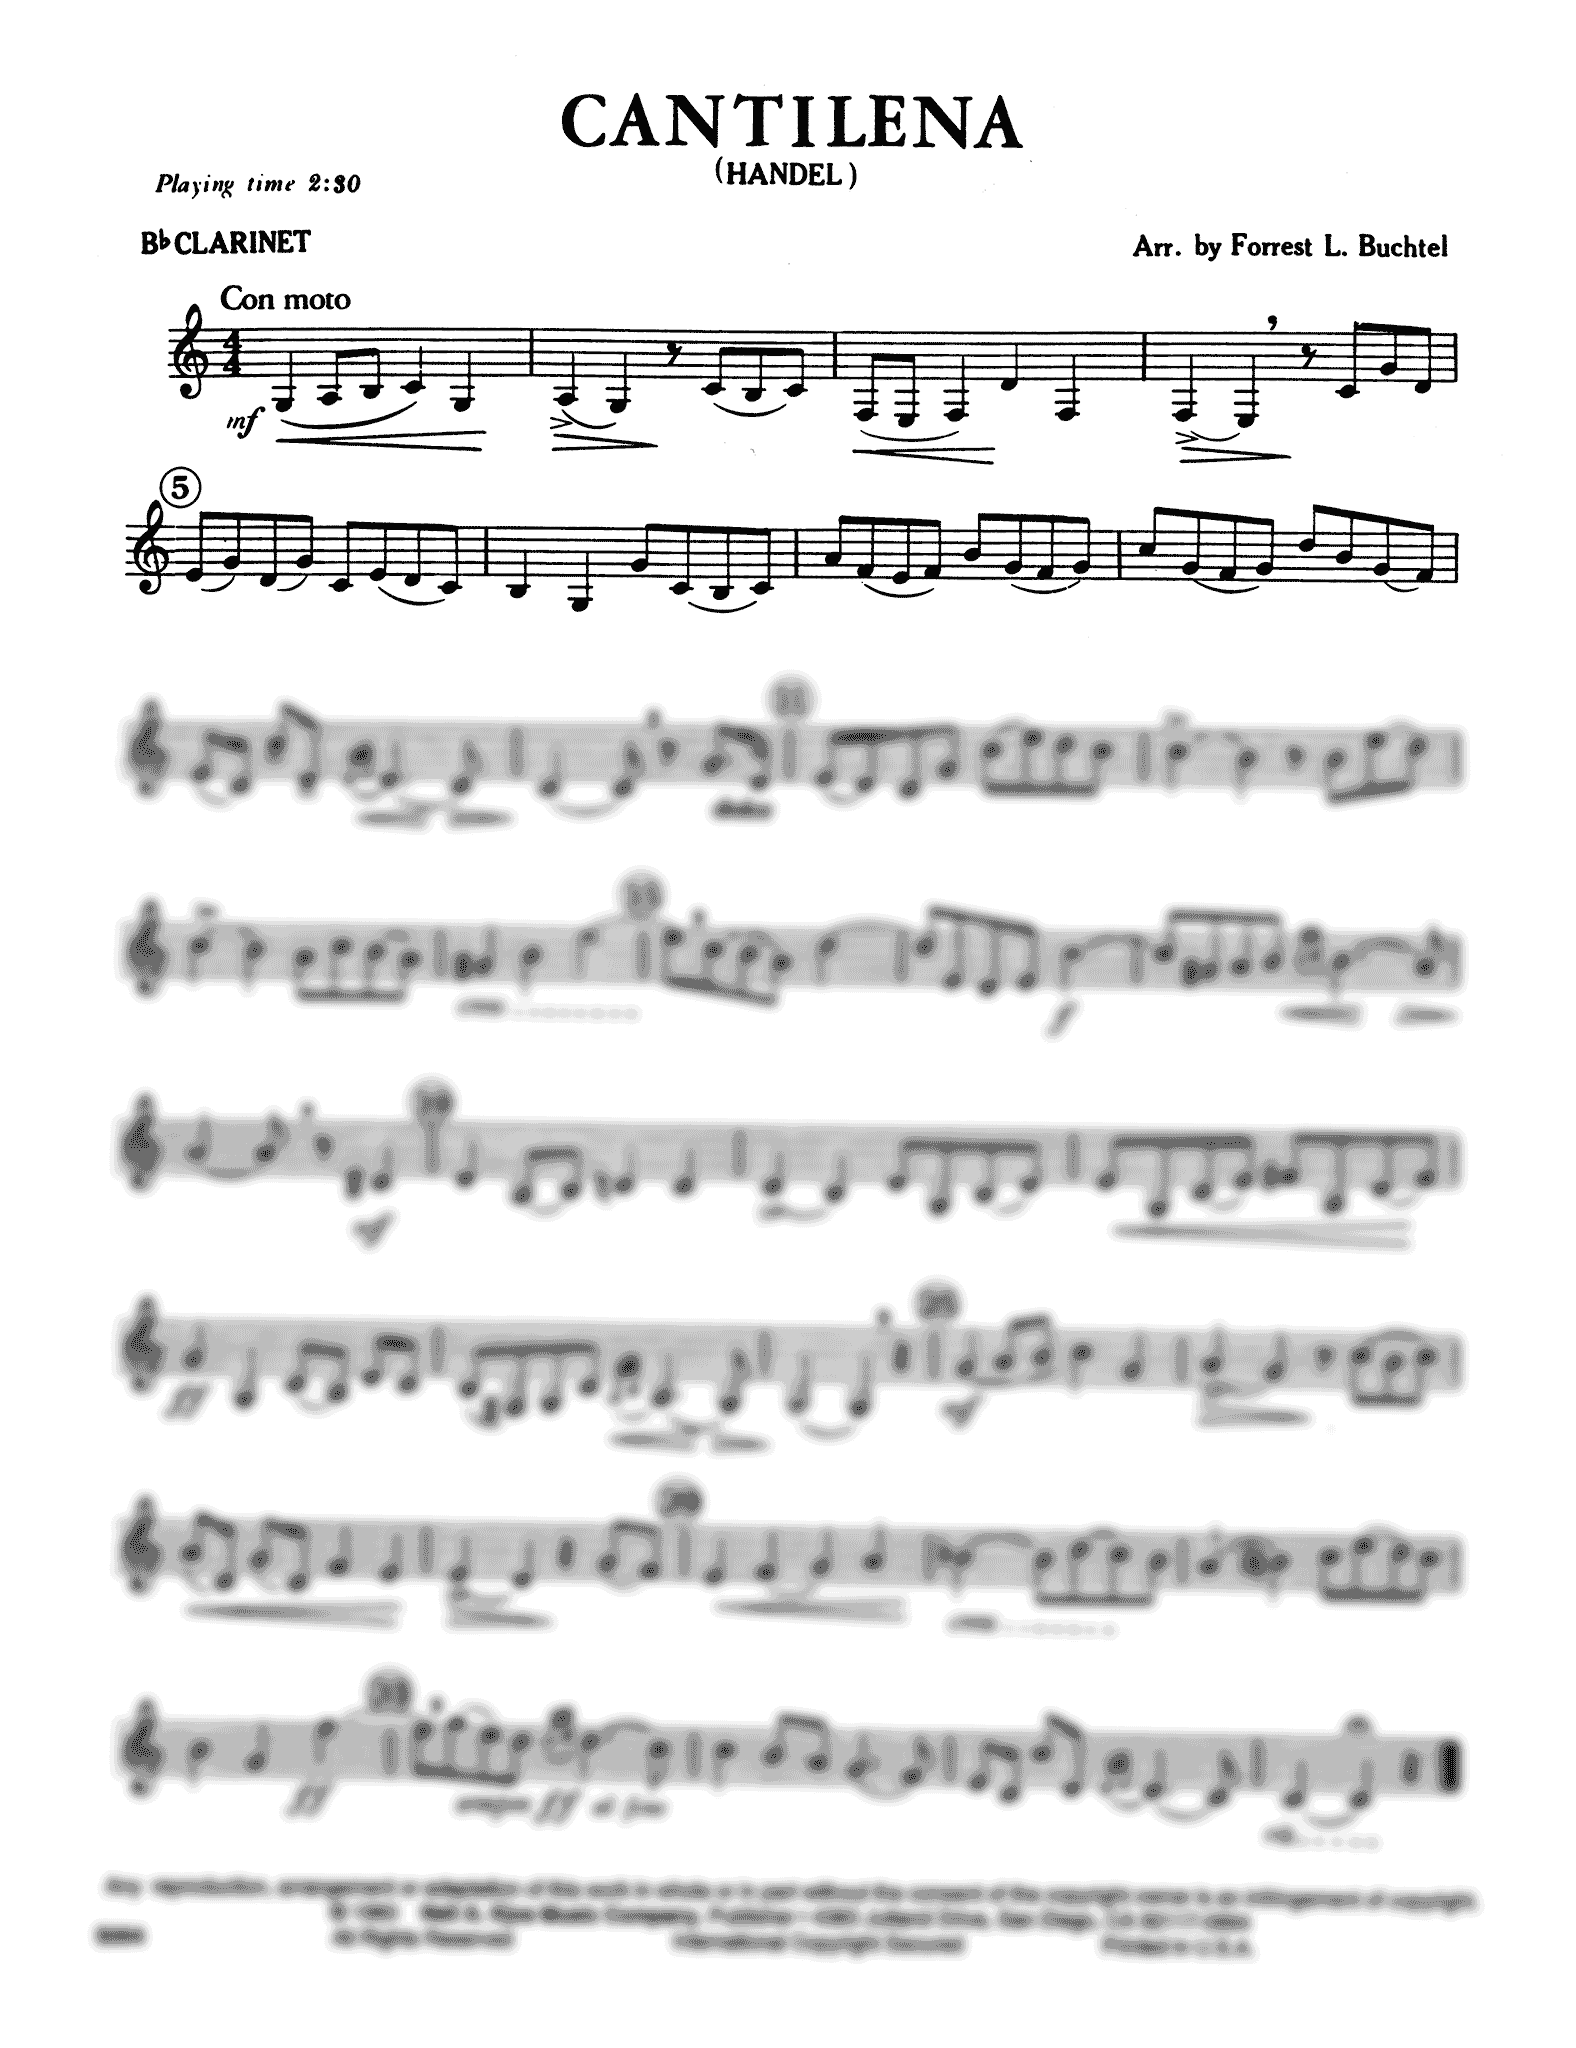 Cantilena Clarinet part